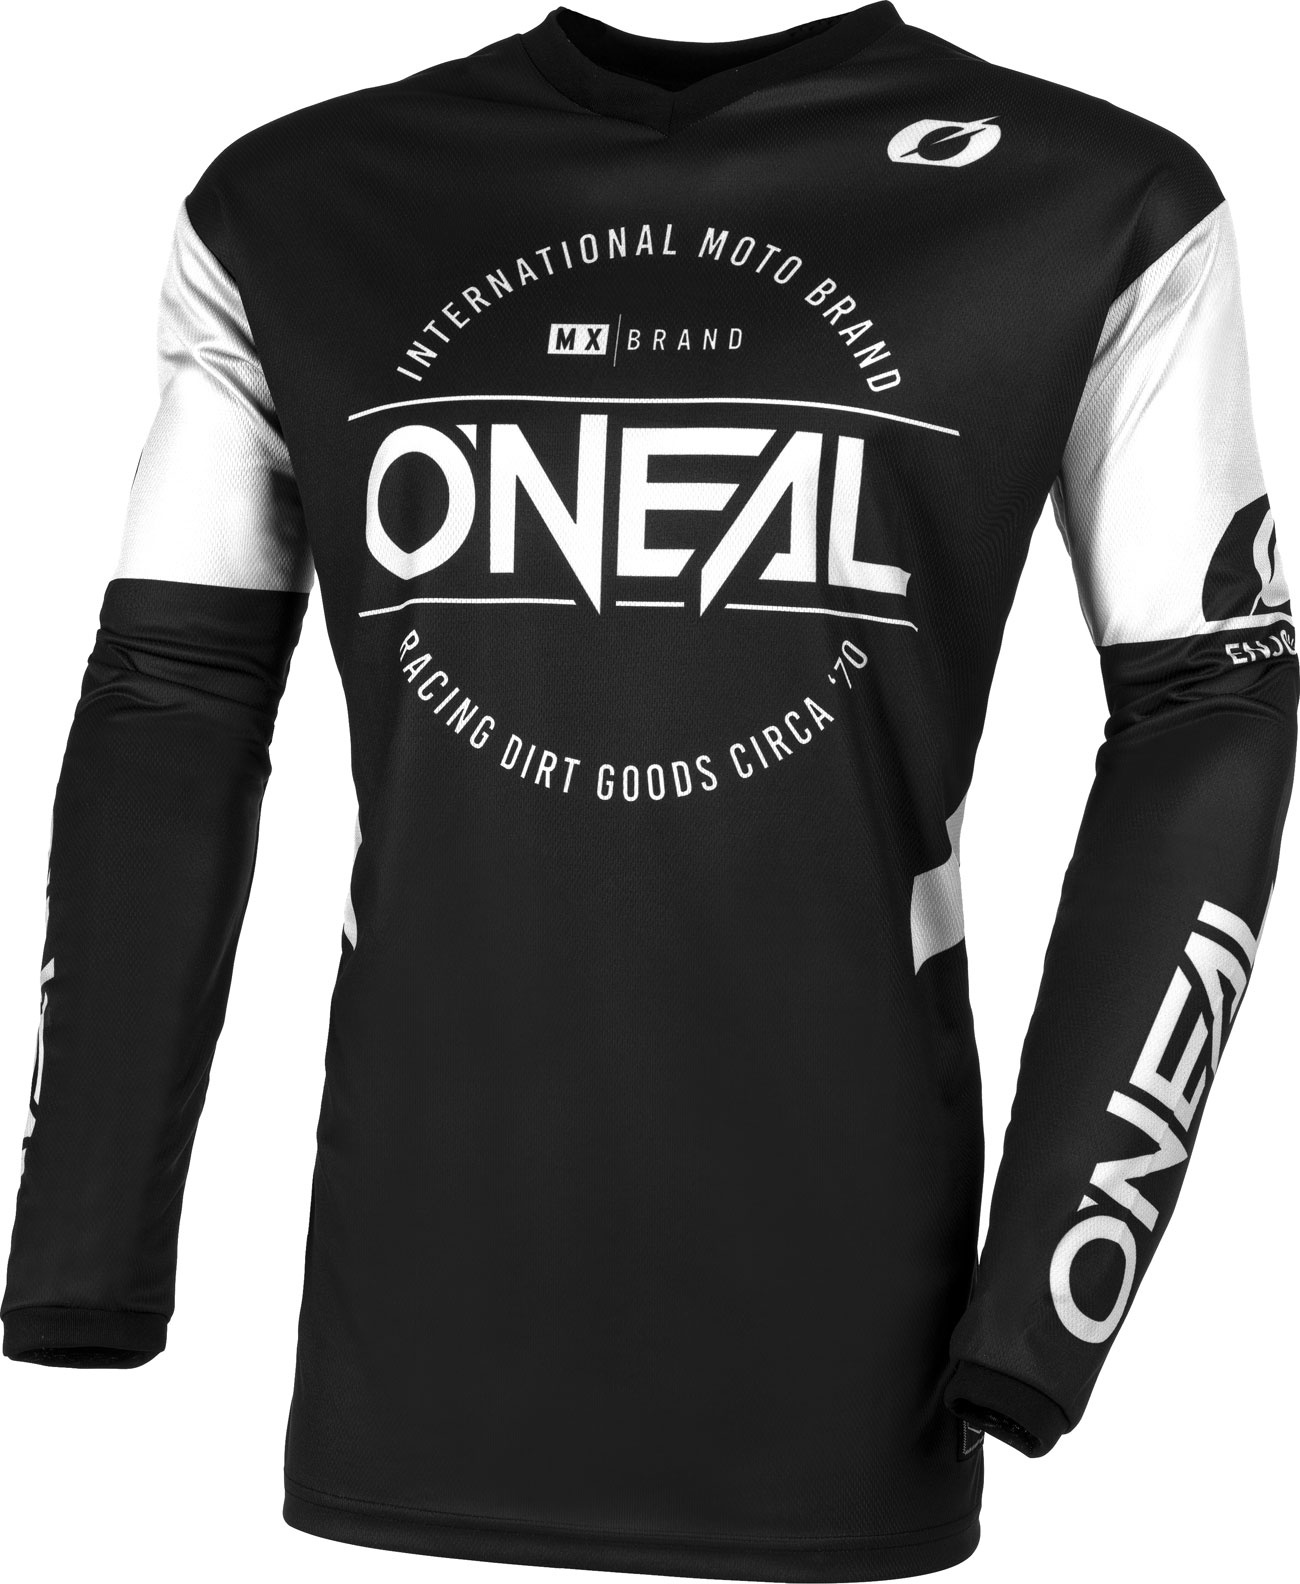 ONeal Element Brand S23, jersey - Noir/Blanc - XXL